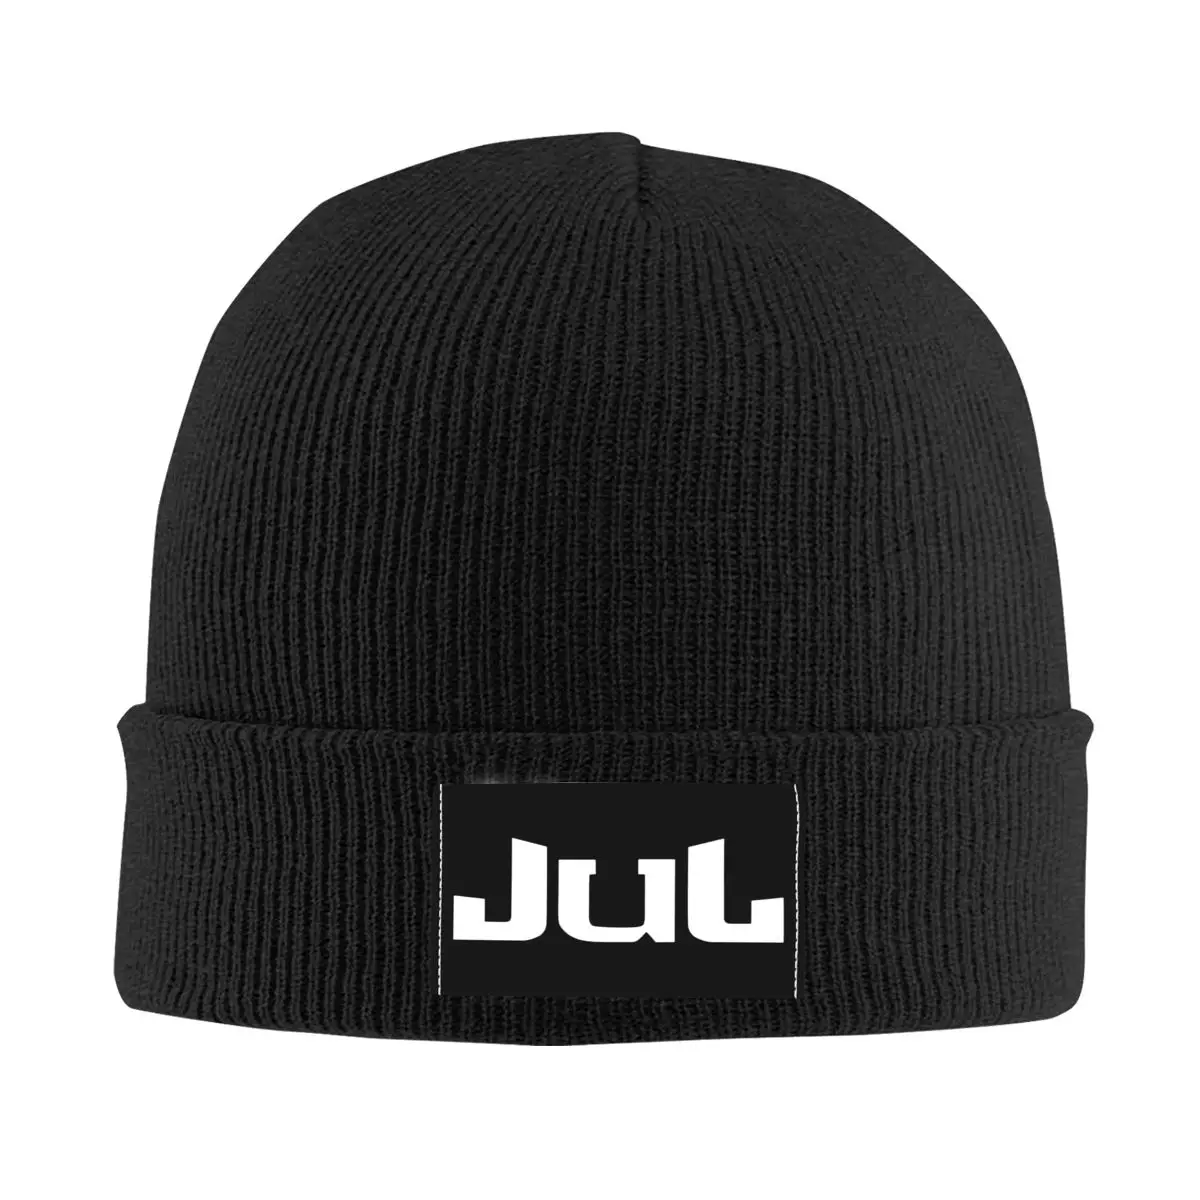 Jul Bonnet Hat Knit Hat Men Women Fashion Unisex Adult French Rapper Music Warm Winter SKullies Beanies Cap 1